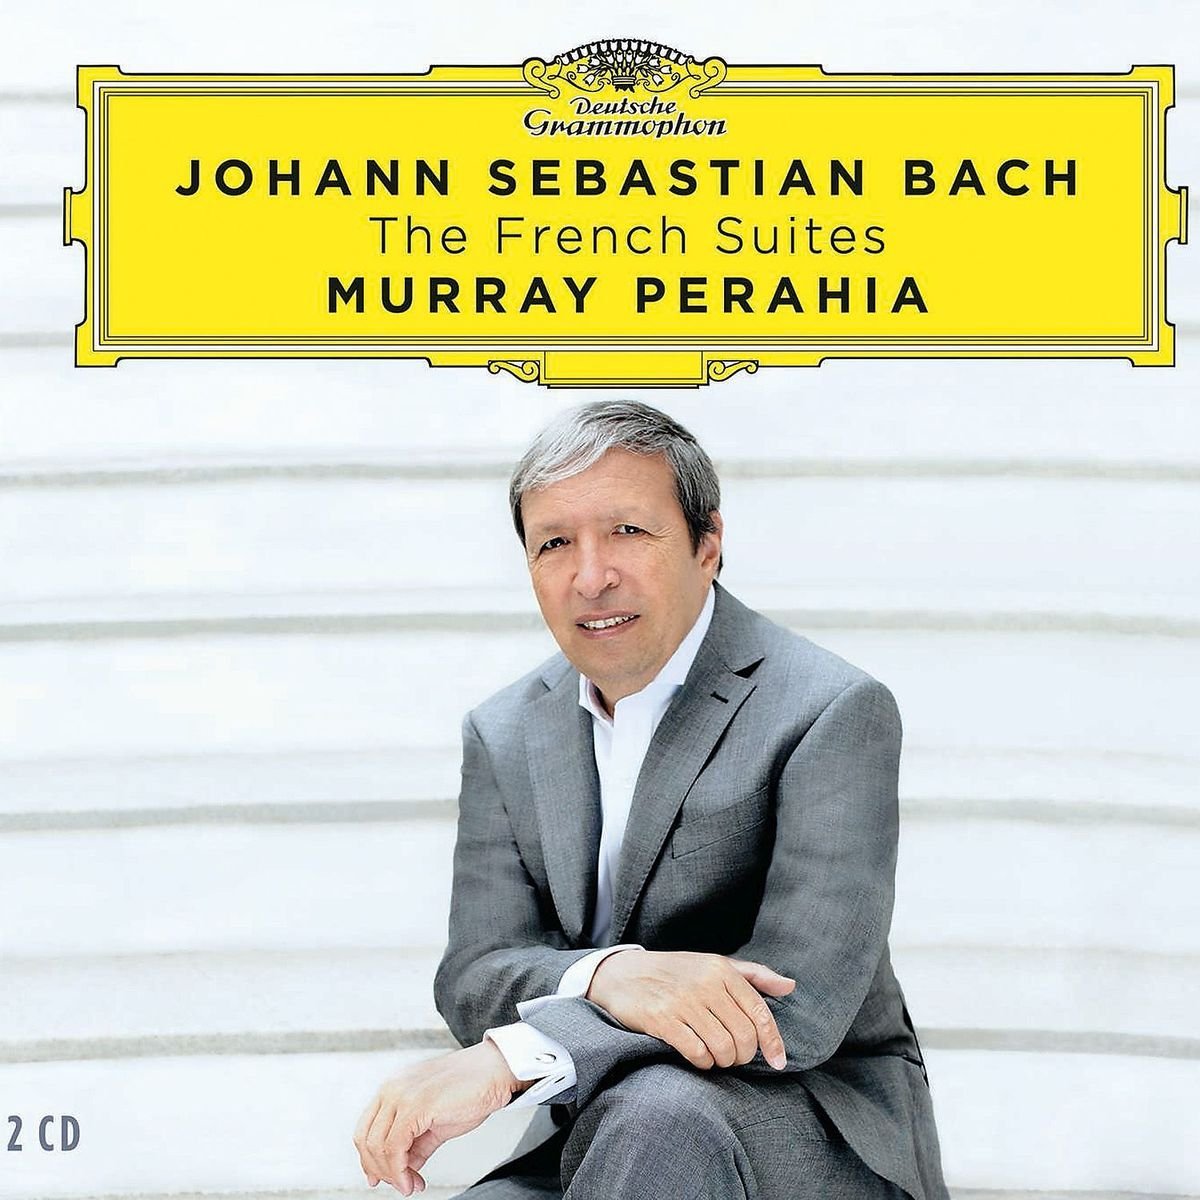 A Standard-Setting DG Debut for Murray Perahia - Classics Today